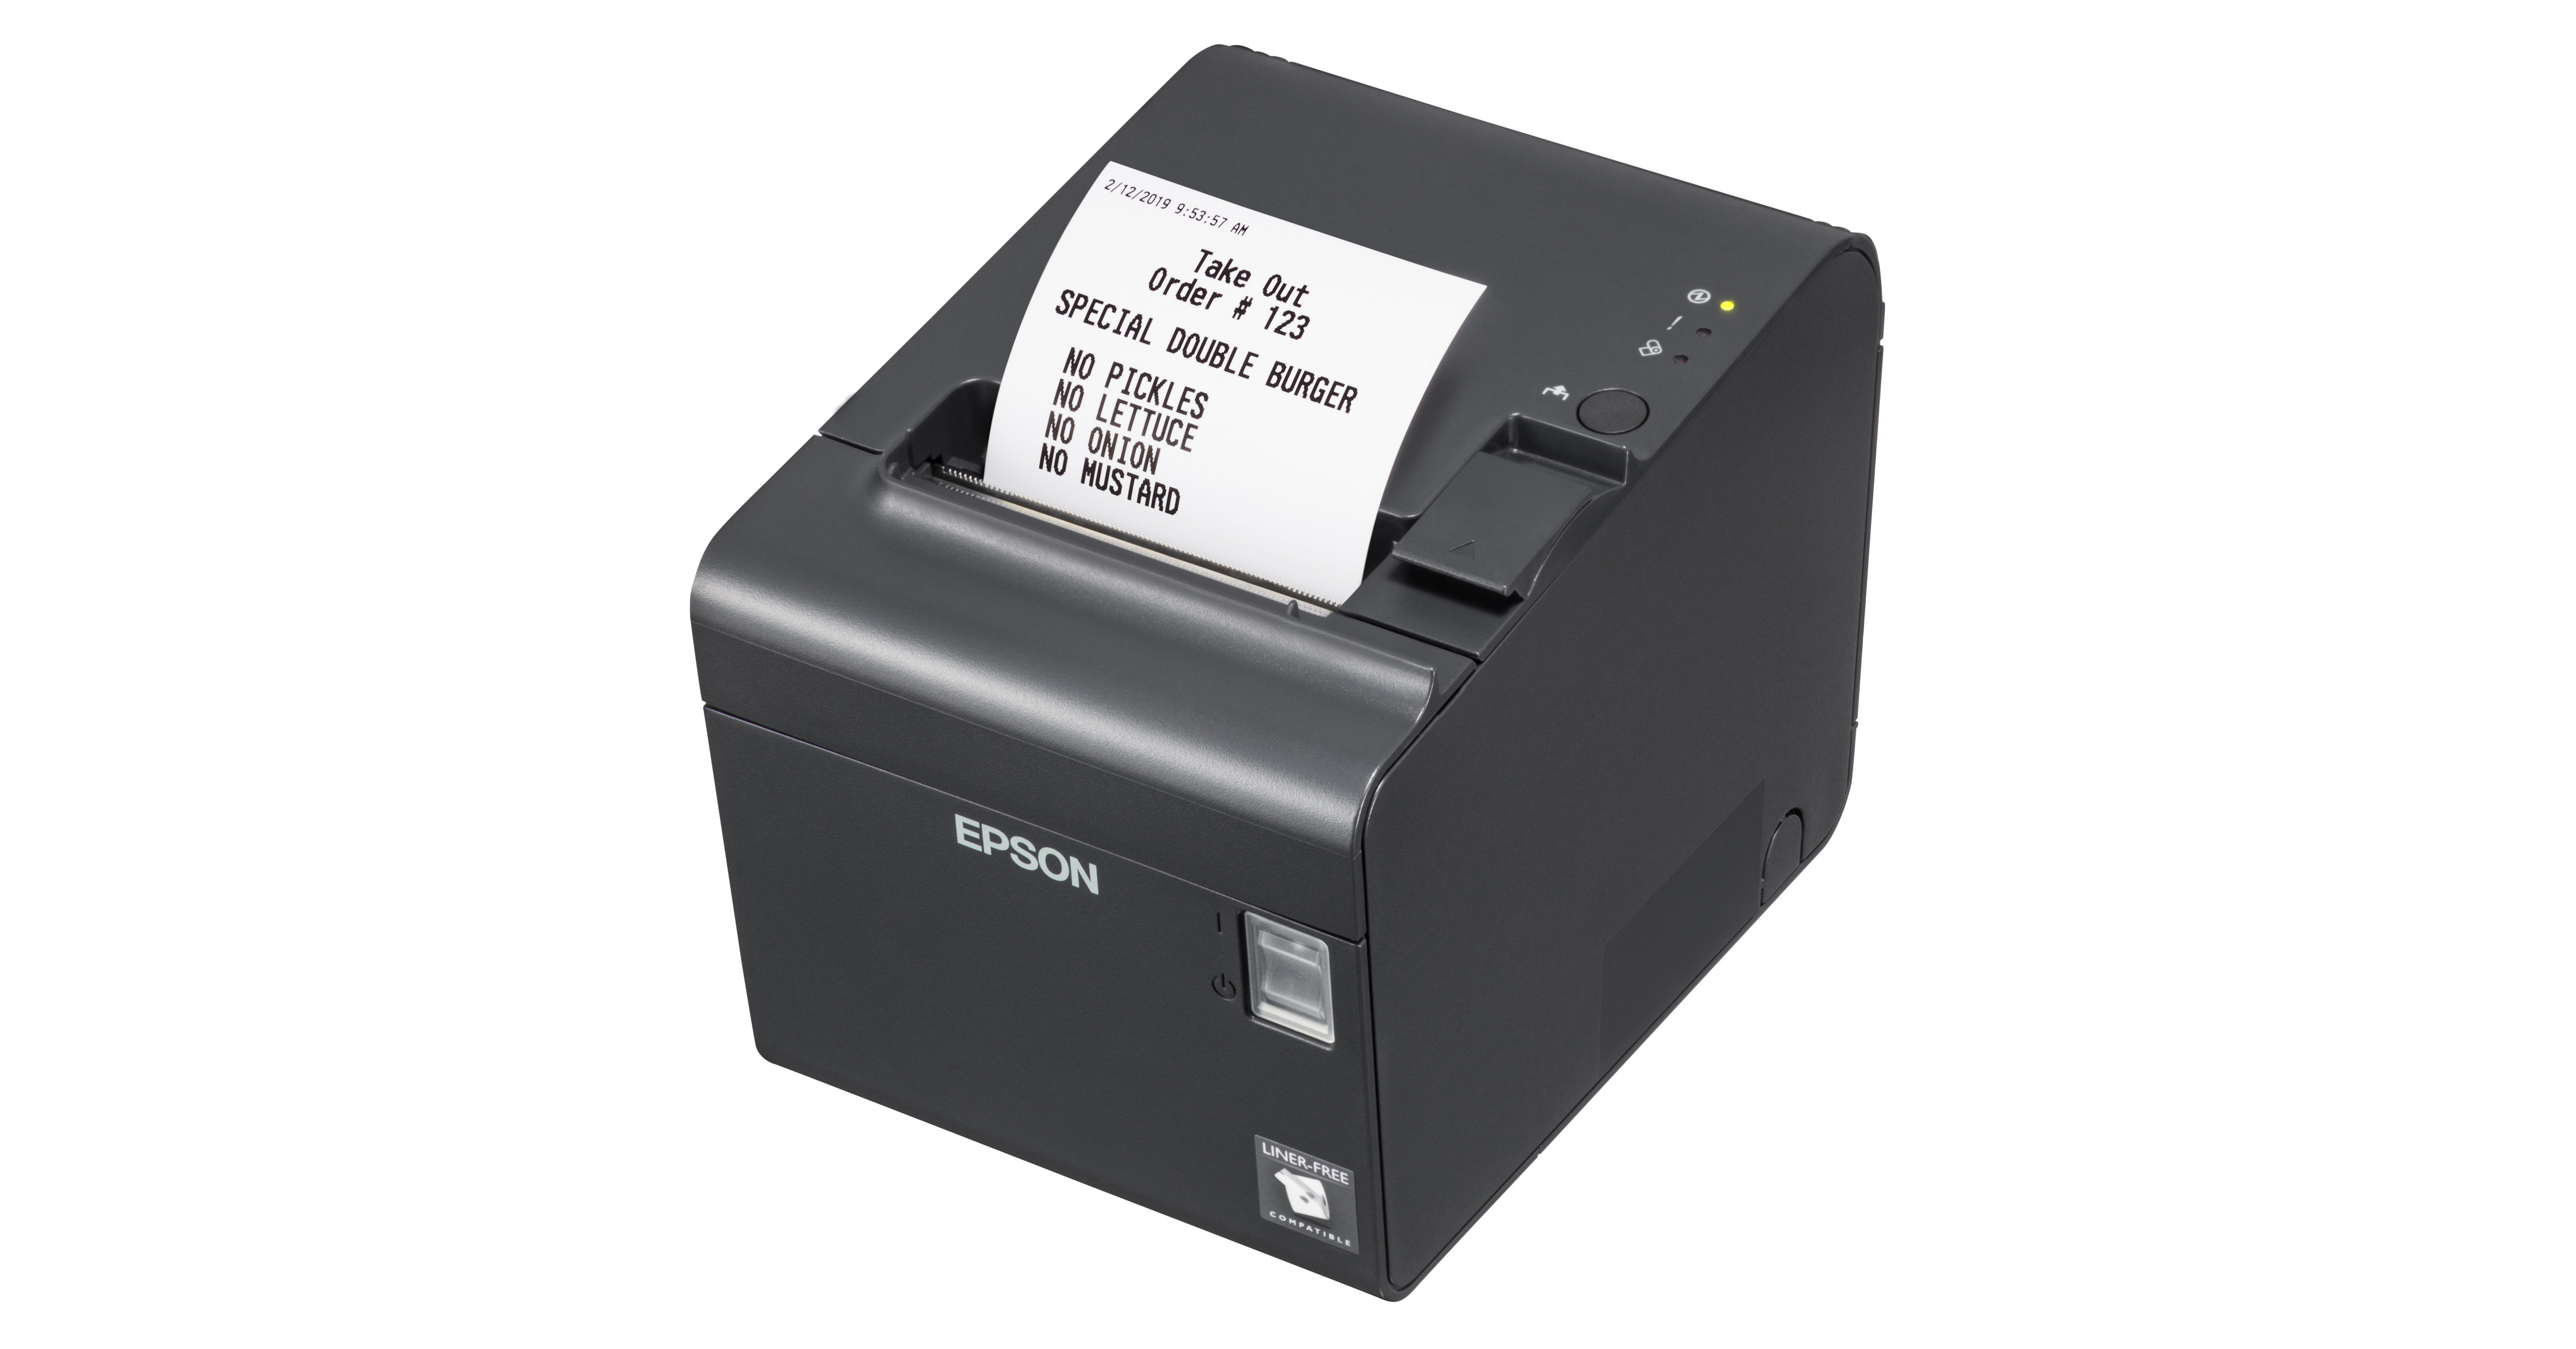 Epson Announces New Flexible and Versatile Label Printer